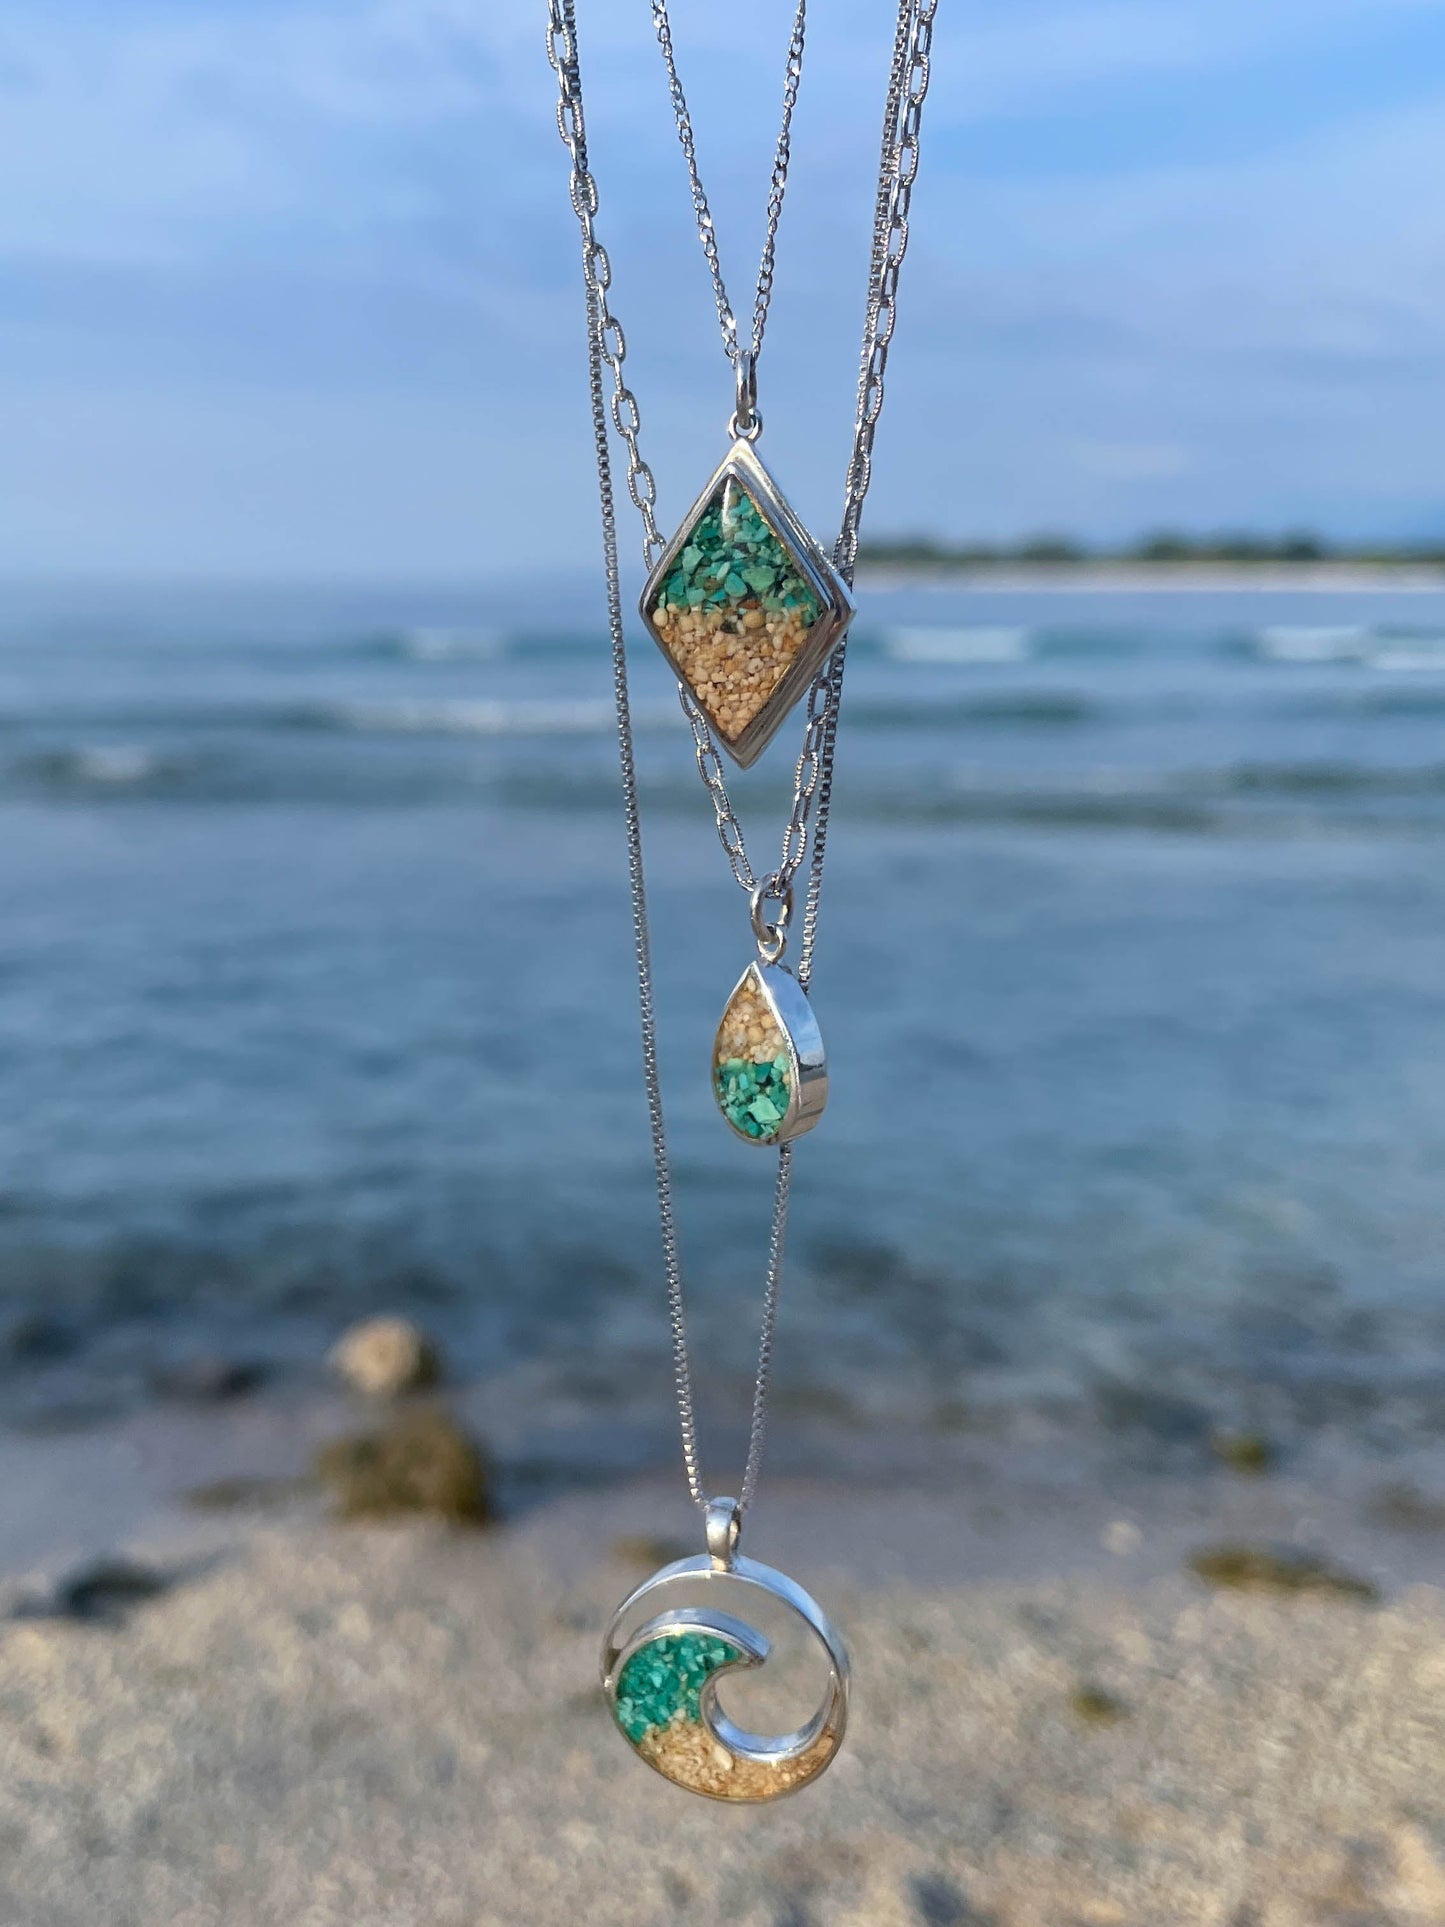 I Miss Bali Sand Jewellery, Seminyak Pendant Necklace with ocean background, Handmade in Bali